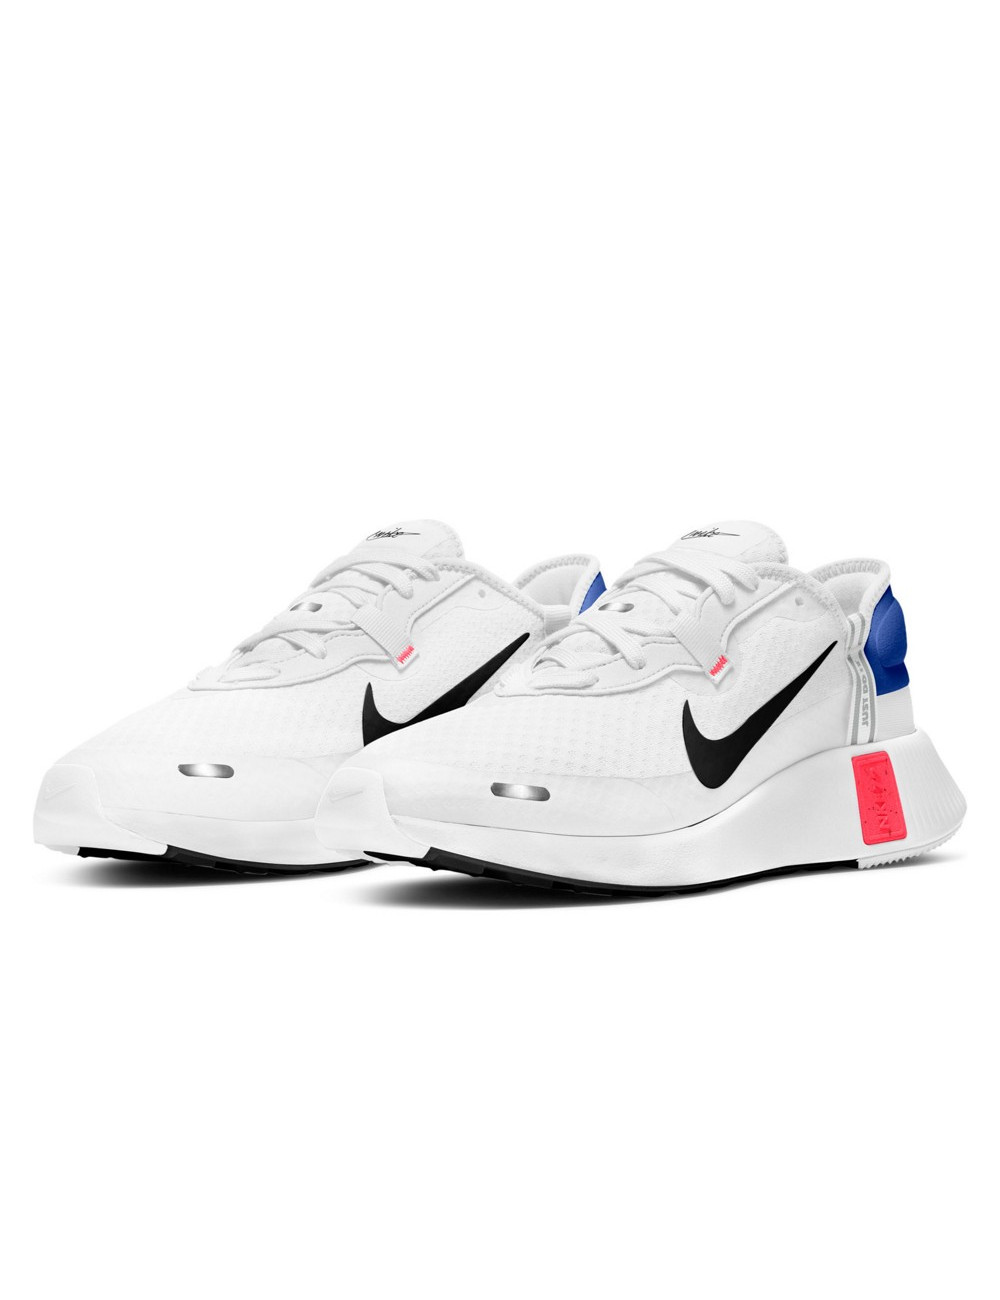 Nike Reposto sneakers in white